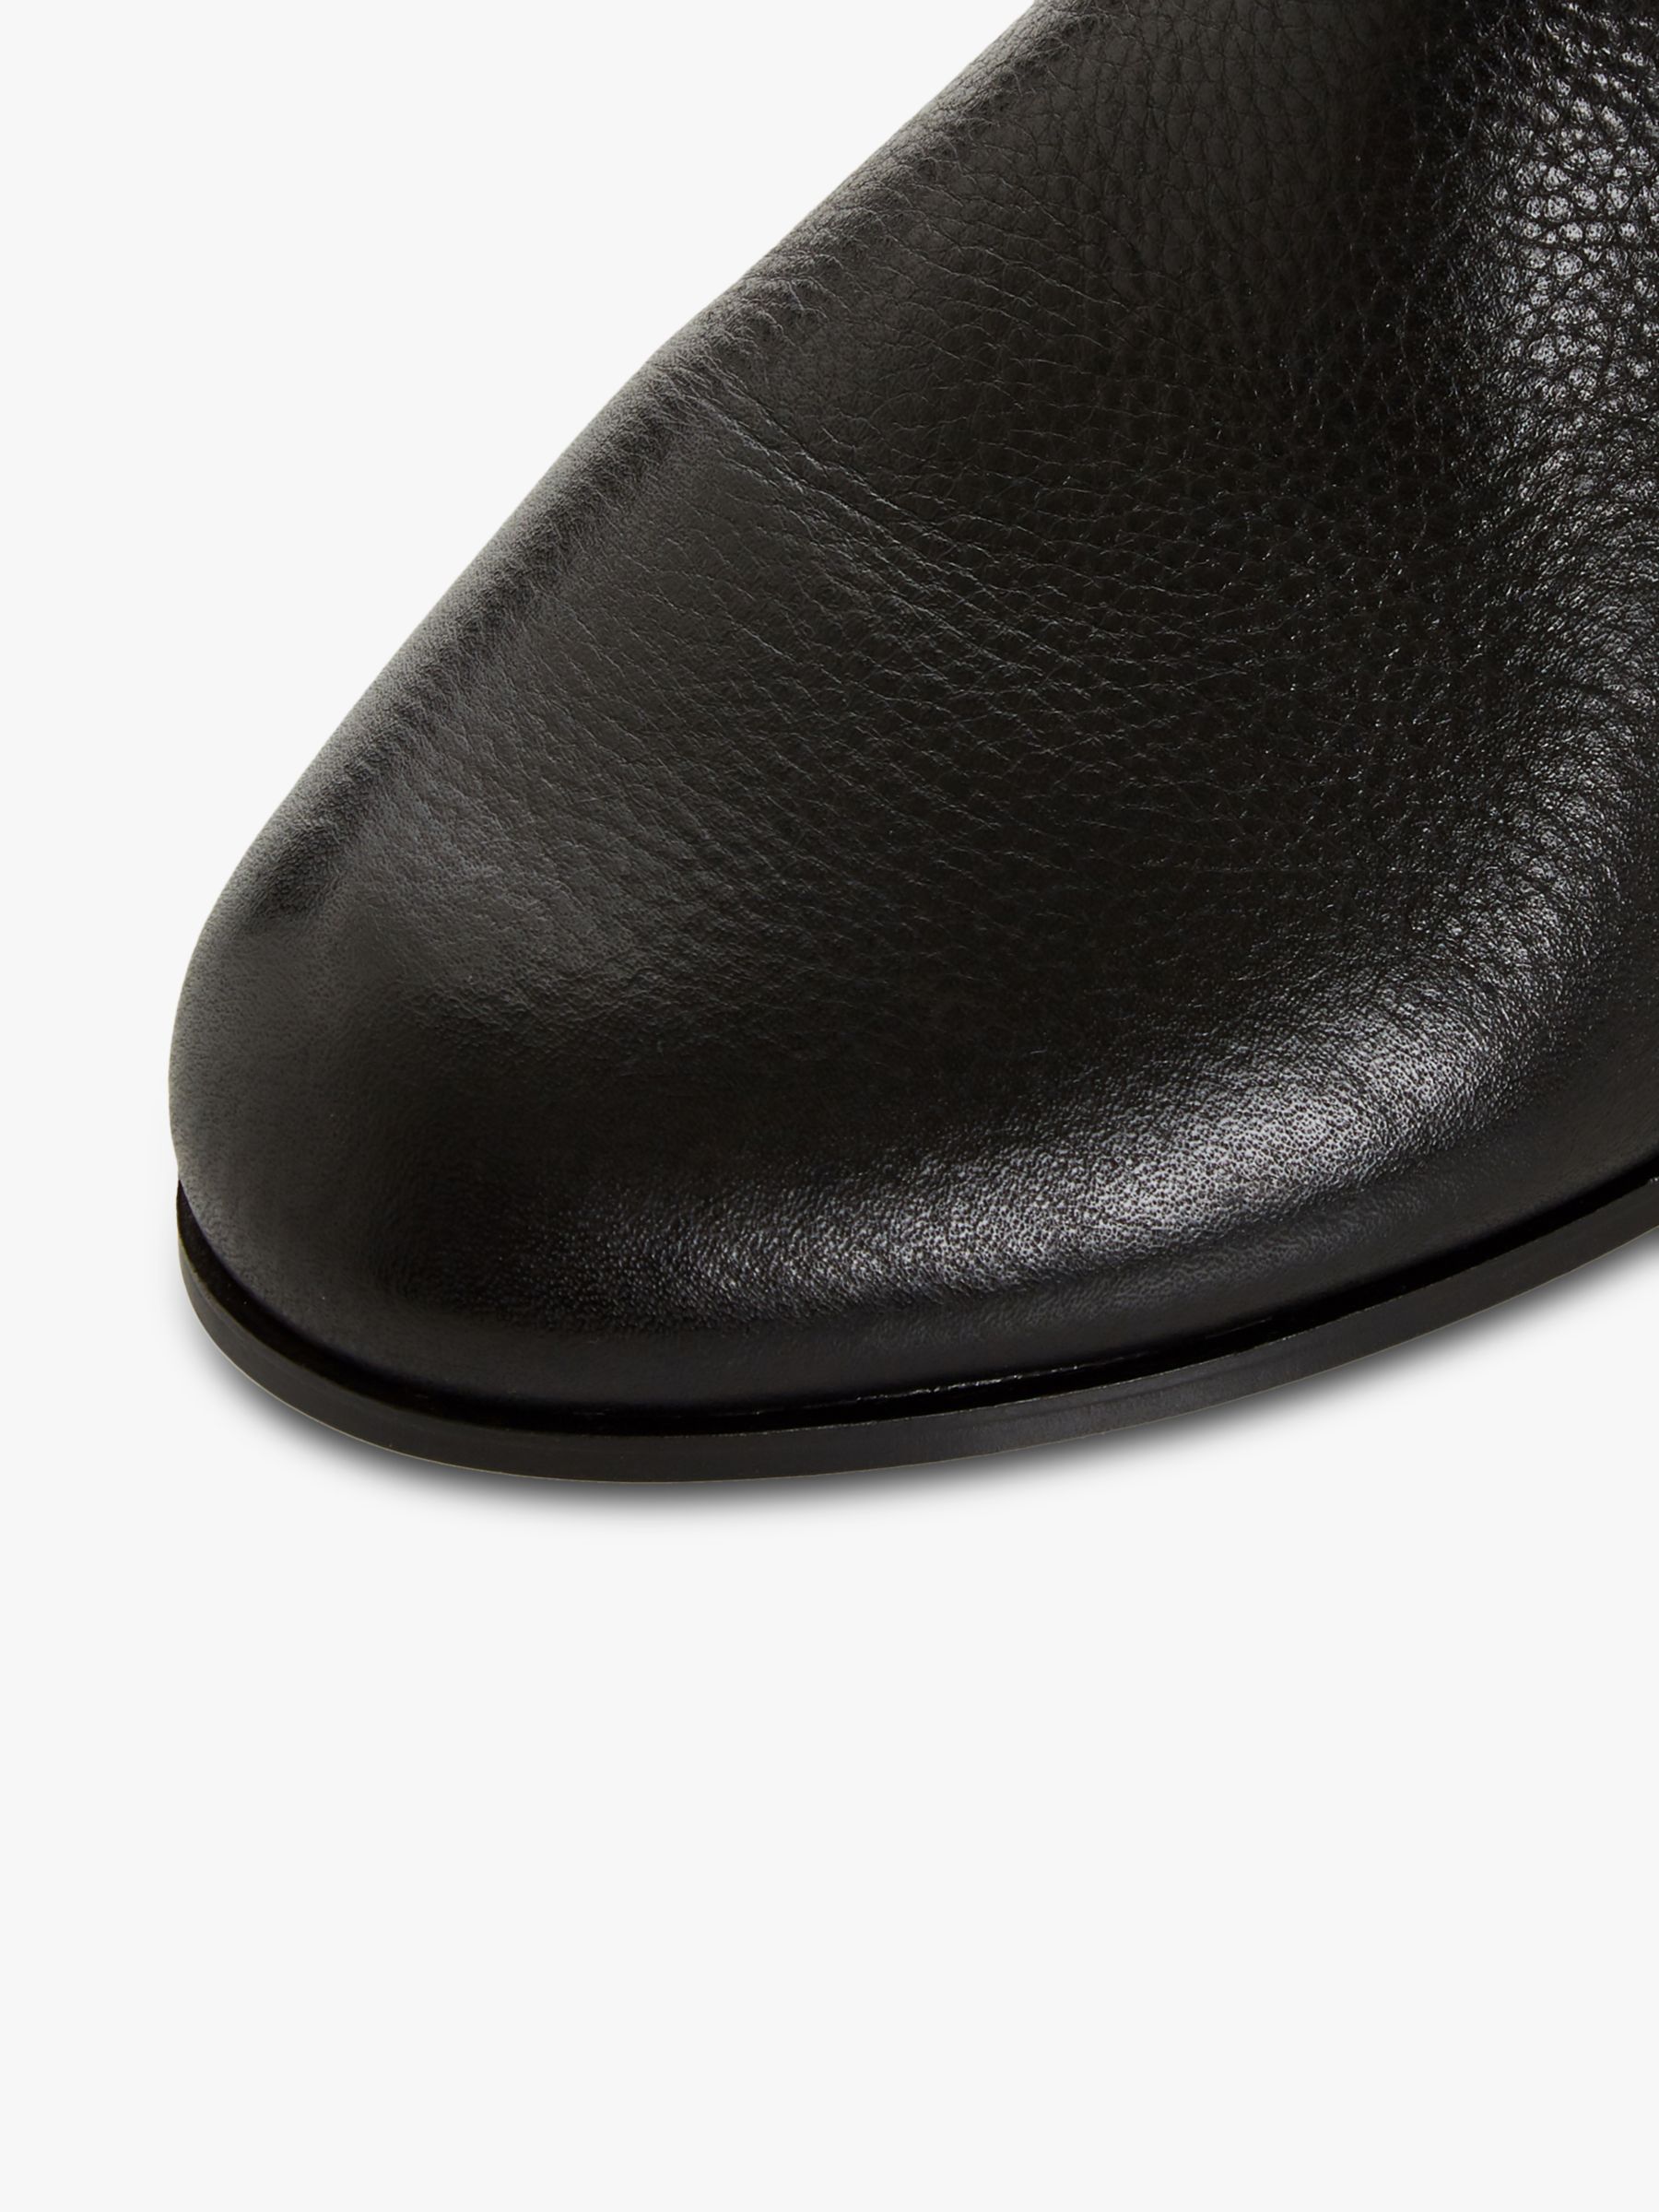 Dune Pandan Leather Croc Print Ankle Boots, Black